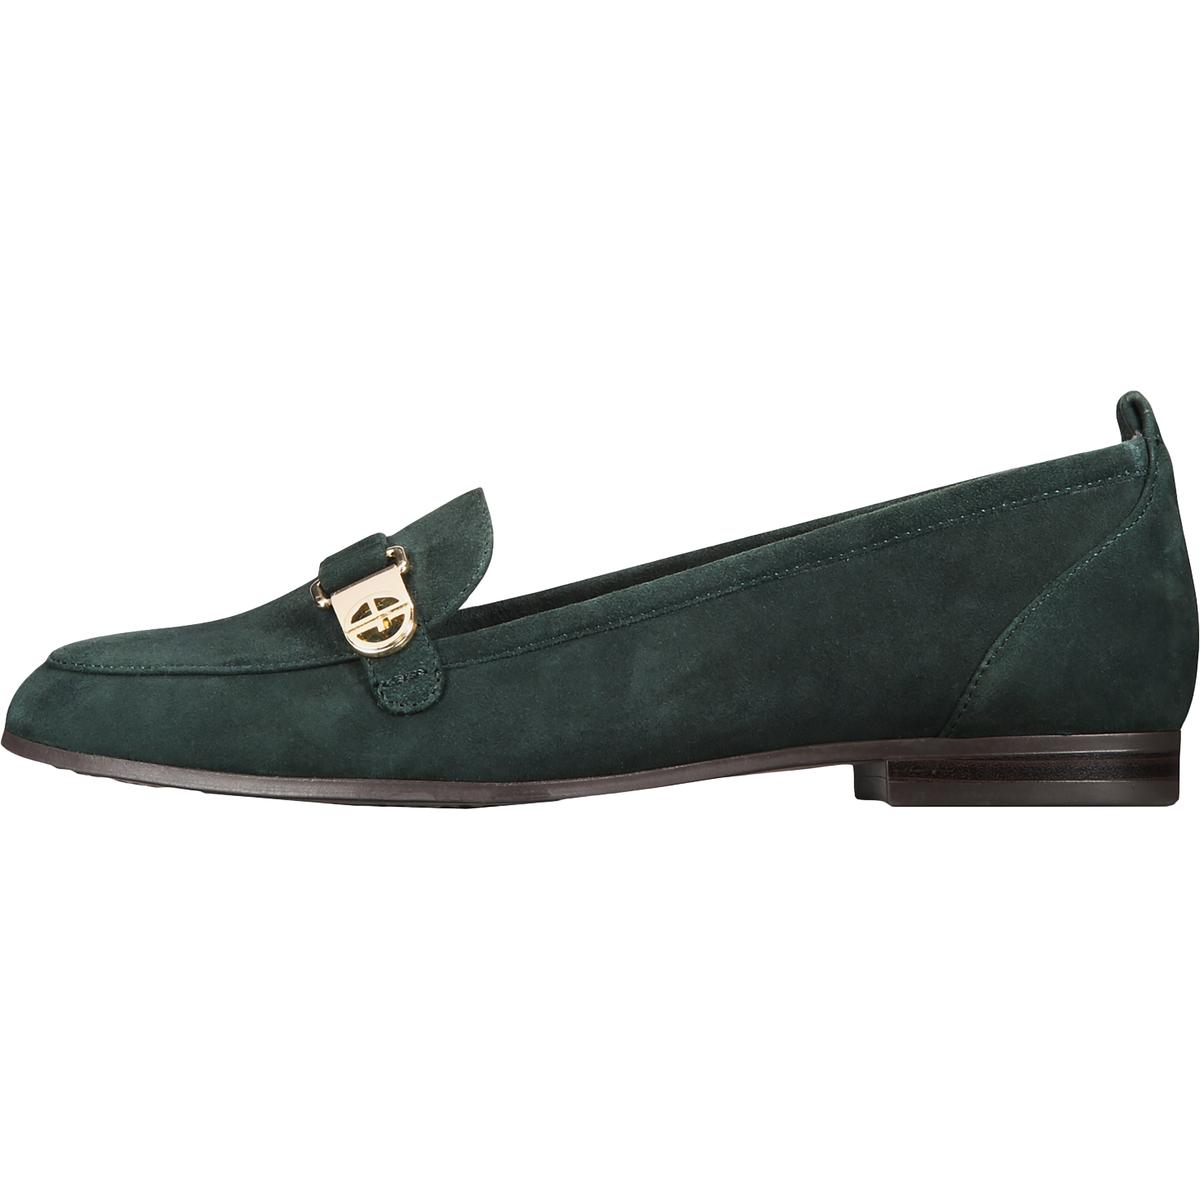 Giani Bernini Womens AXTONN Embossed Slip On Slides Loafers Shoes BHFO 9040 